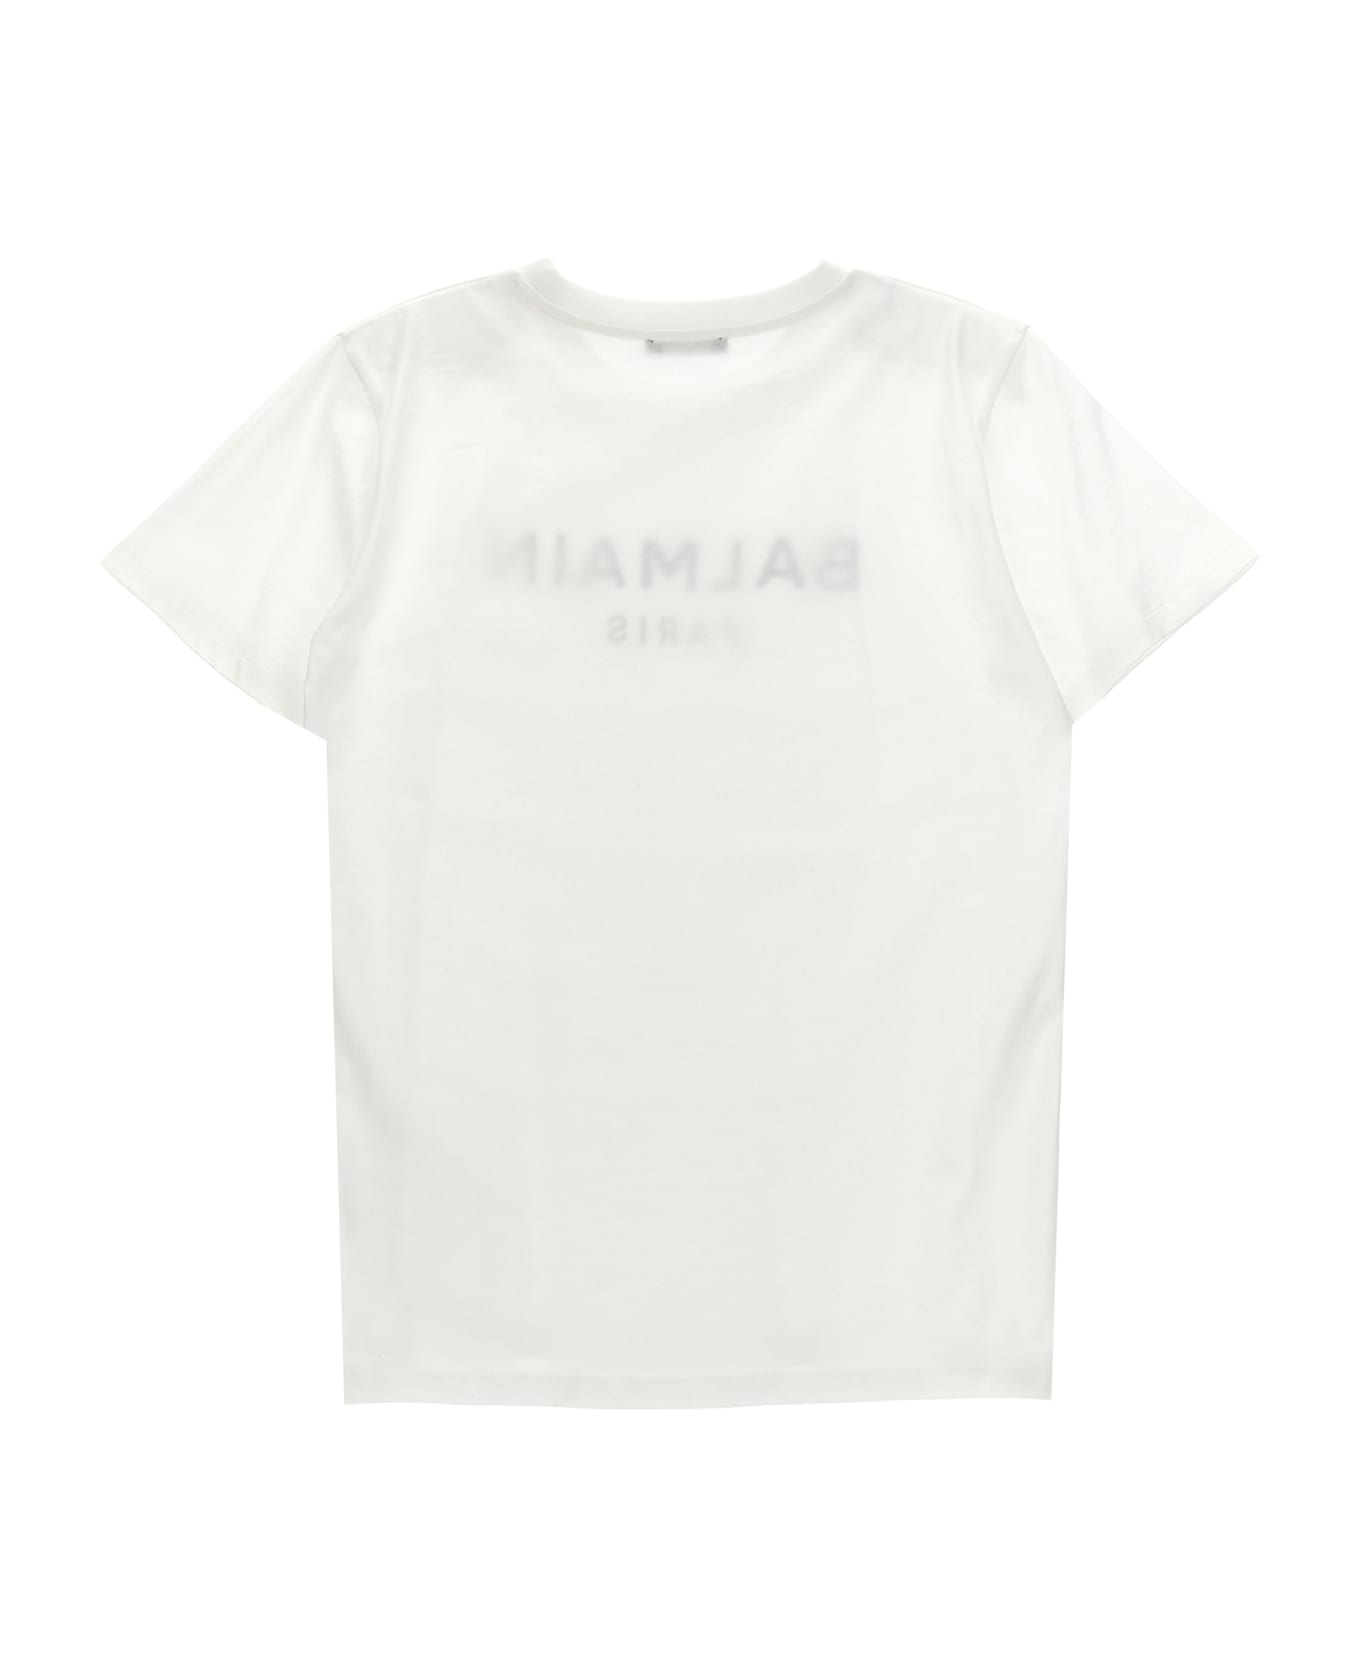 Balmain Sequins Logo T-shirt - White/Black